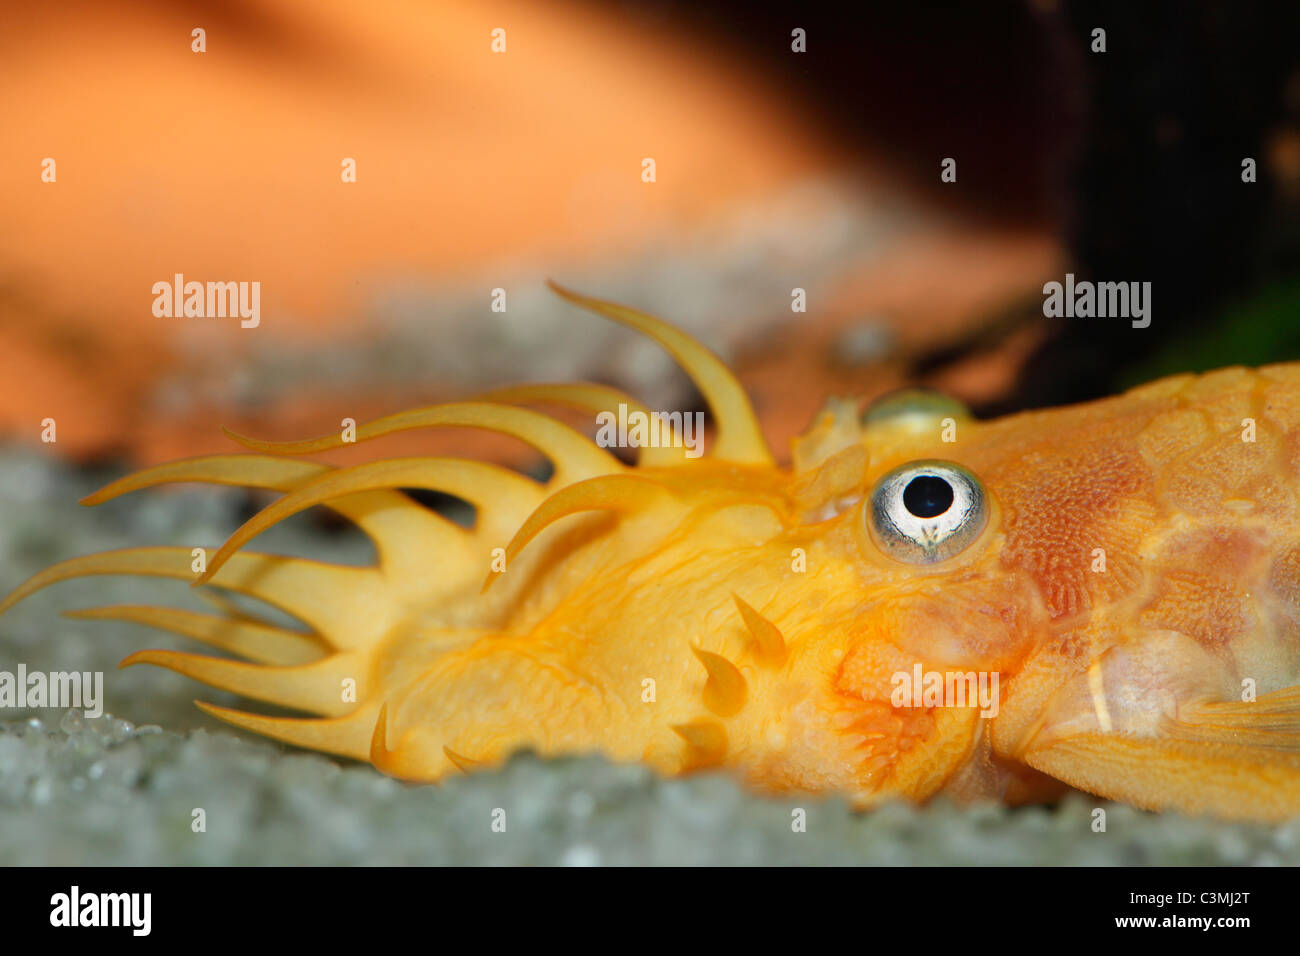 South America, Yellow ancistrus in aquarium, close up Stock Photo